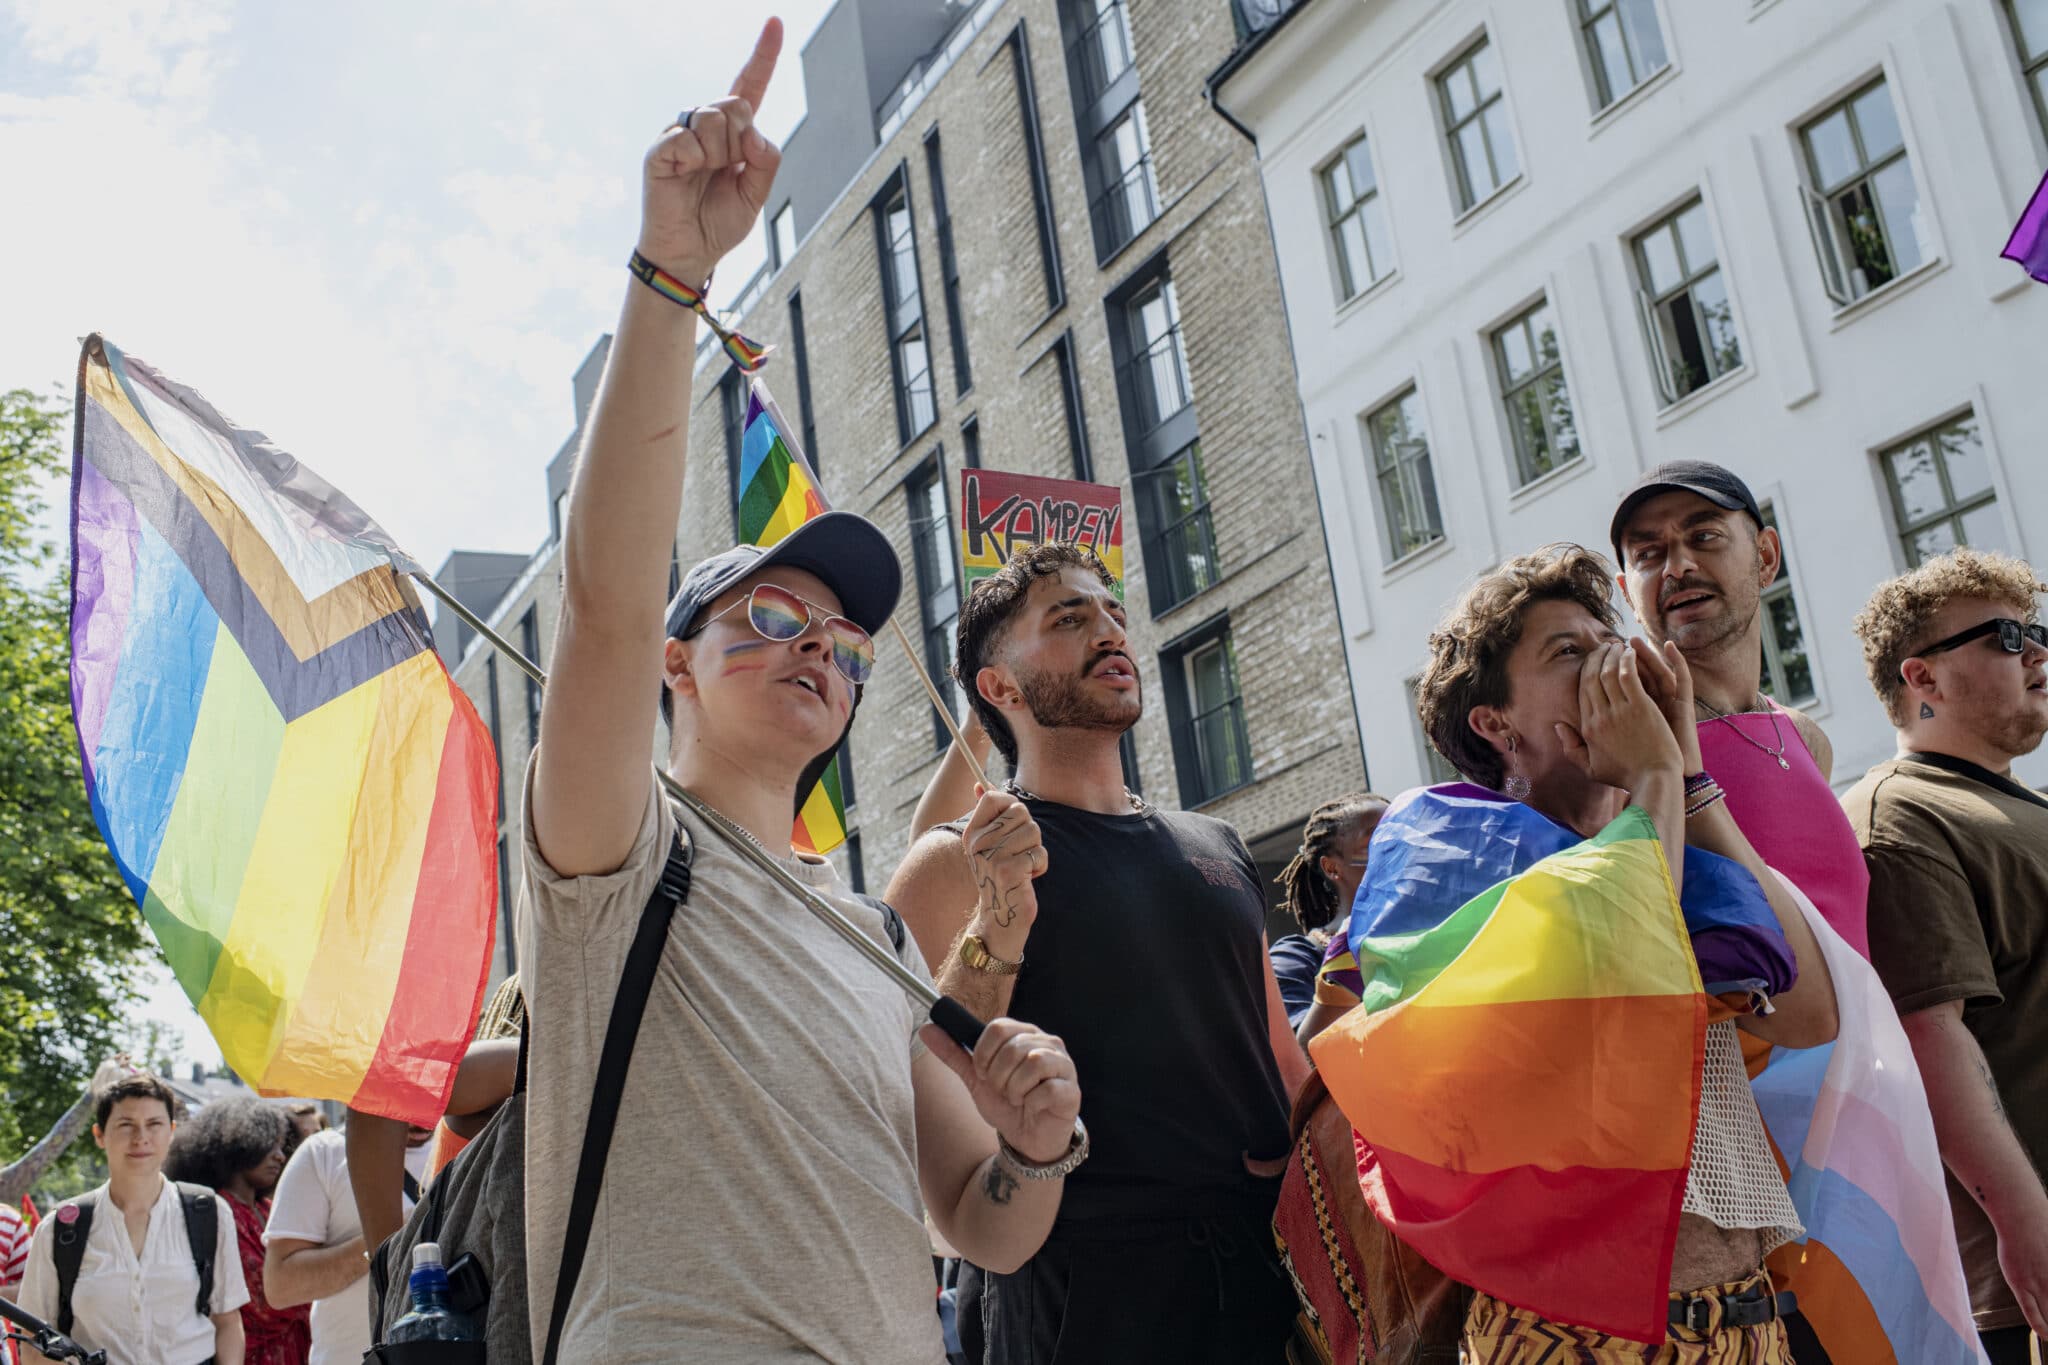 Oslo shooting: LGBTQ Norwegians stage 'spontaneous Pride parade'